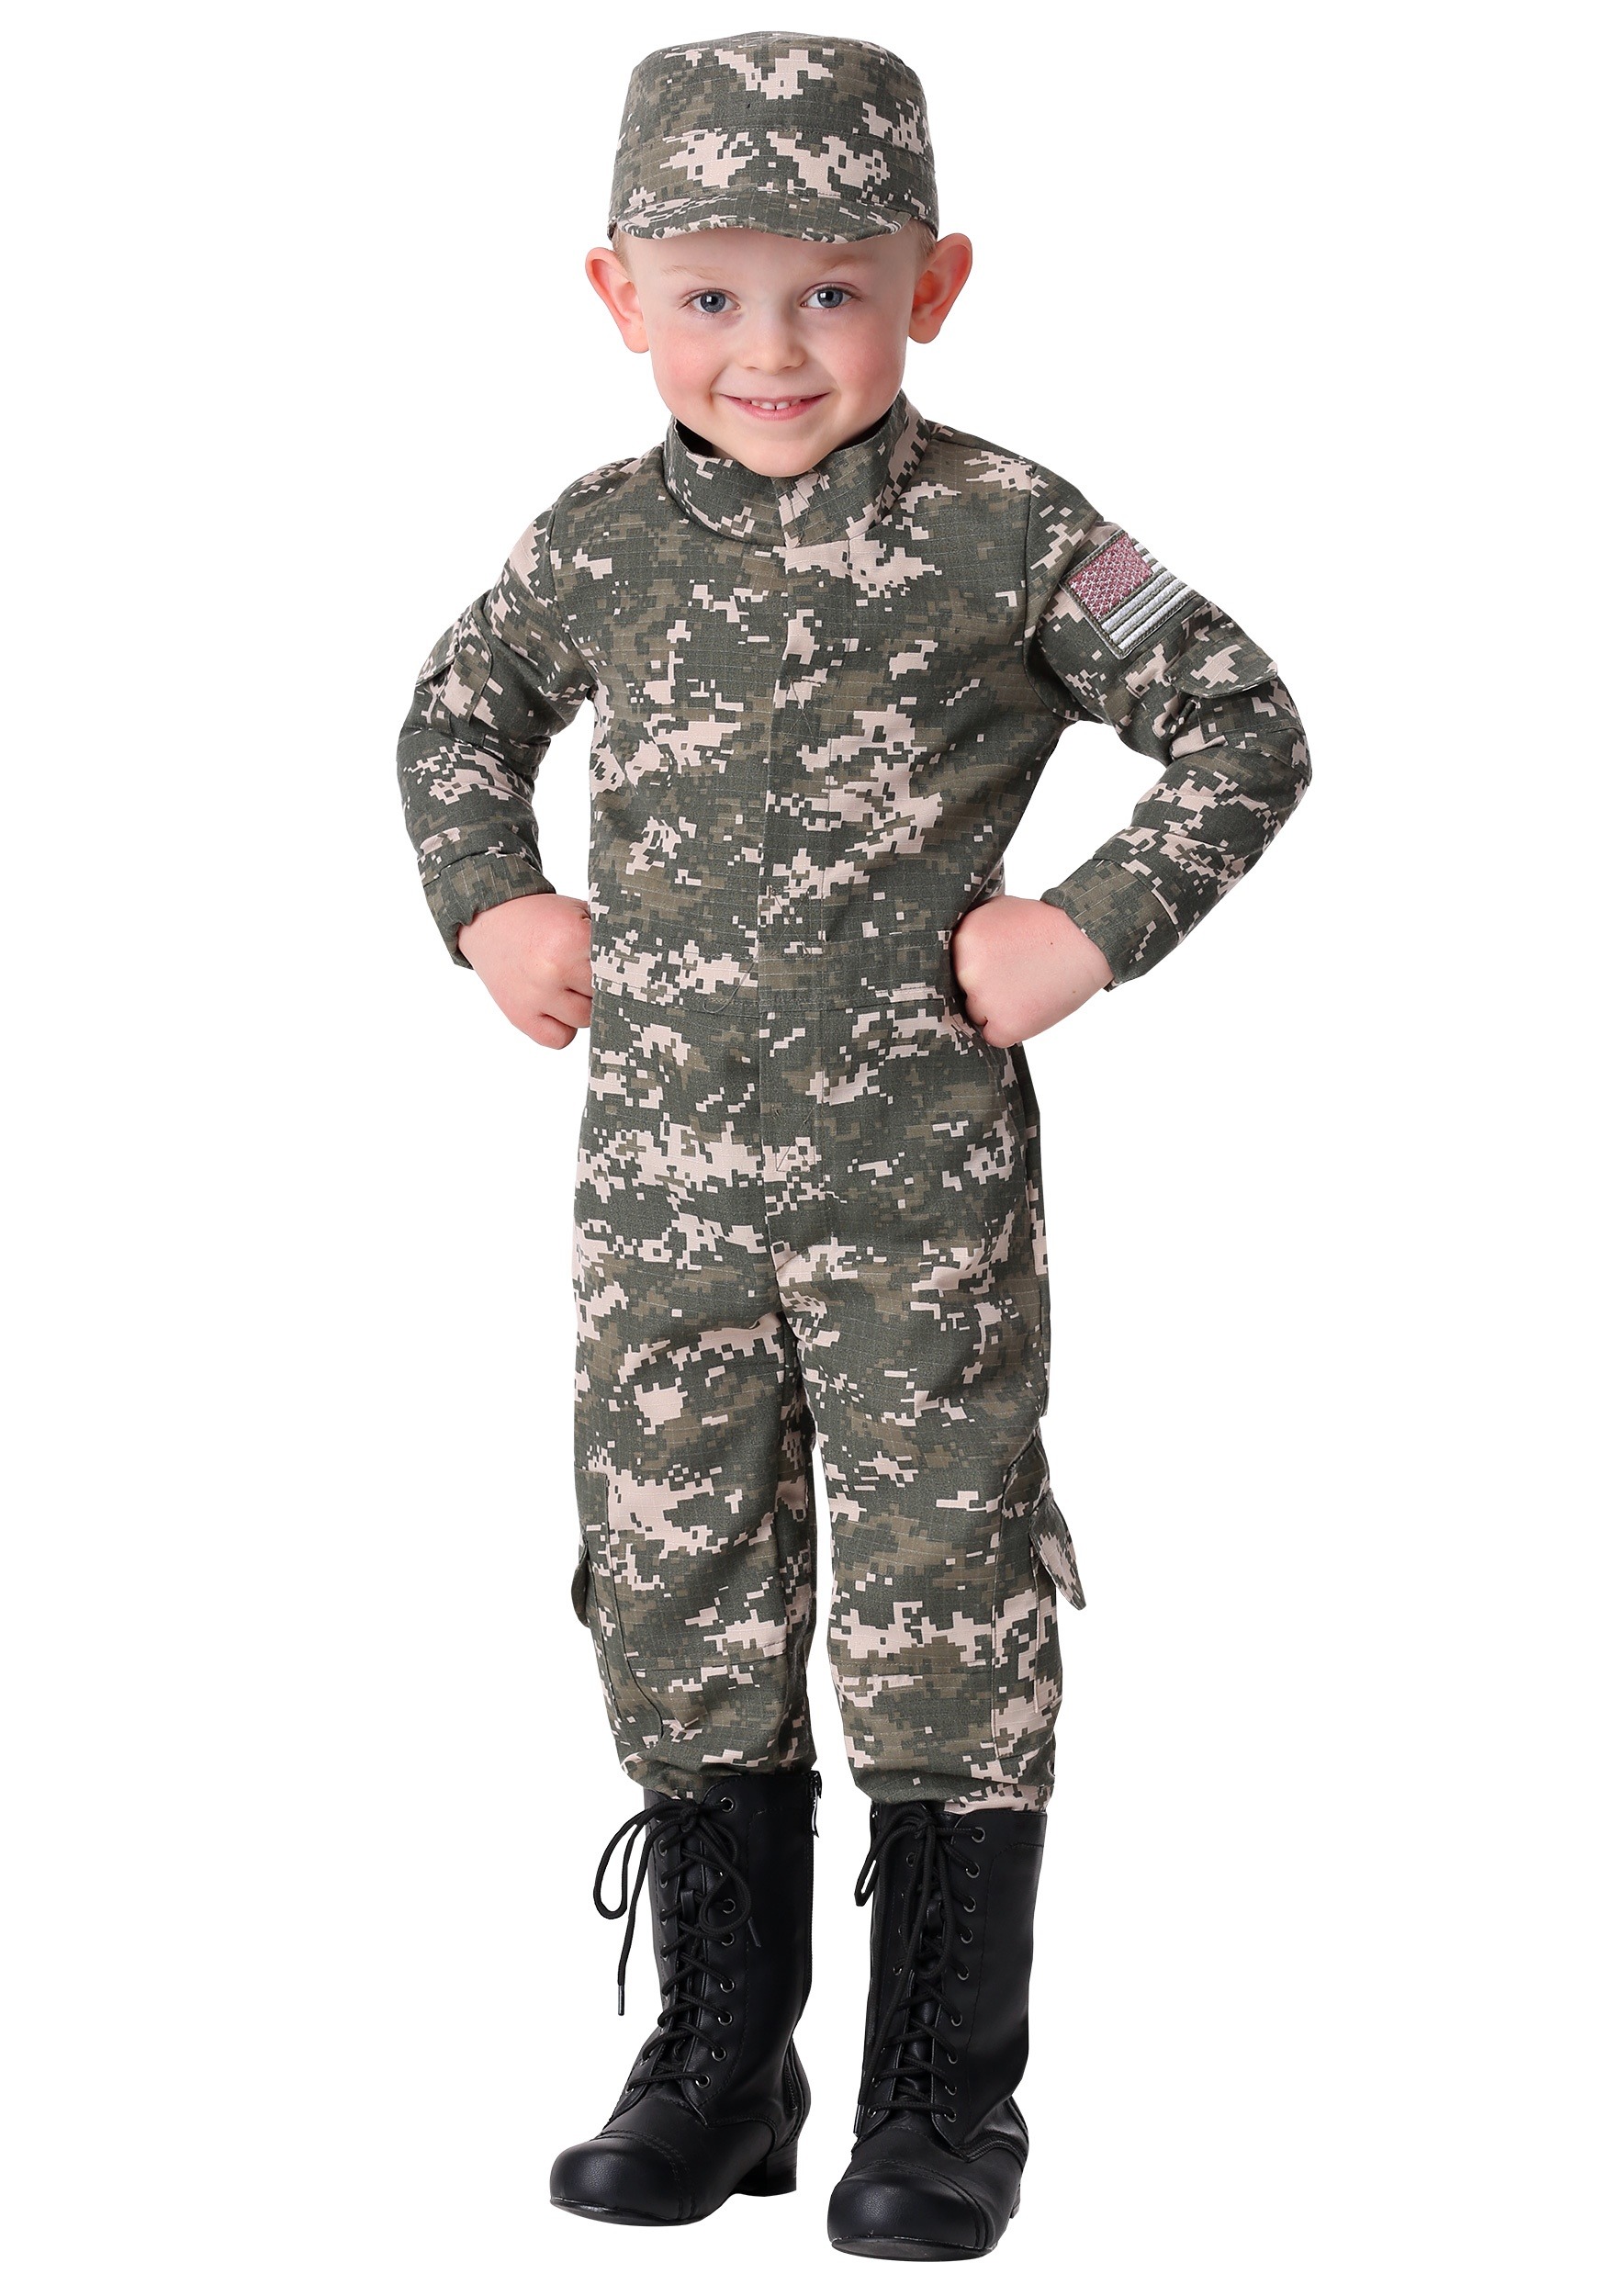 Modern Combat Uniform Costume For A Toddler